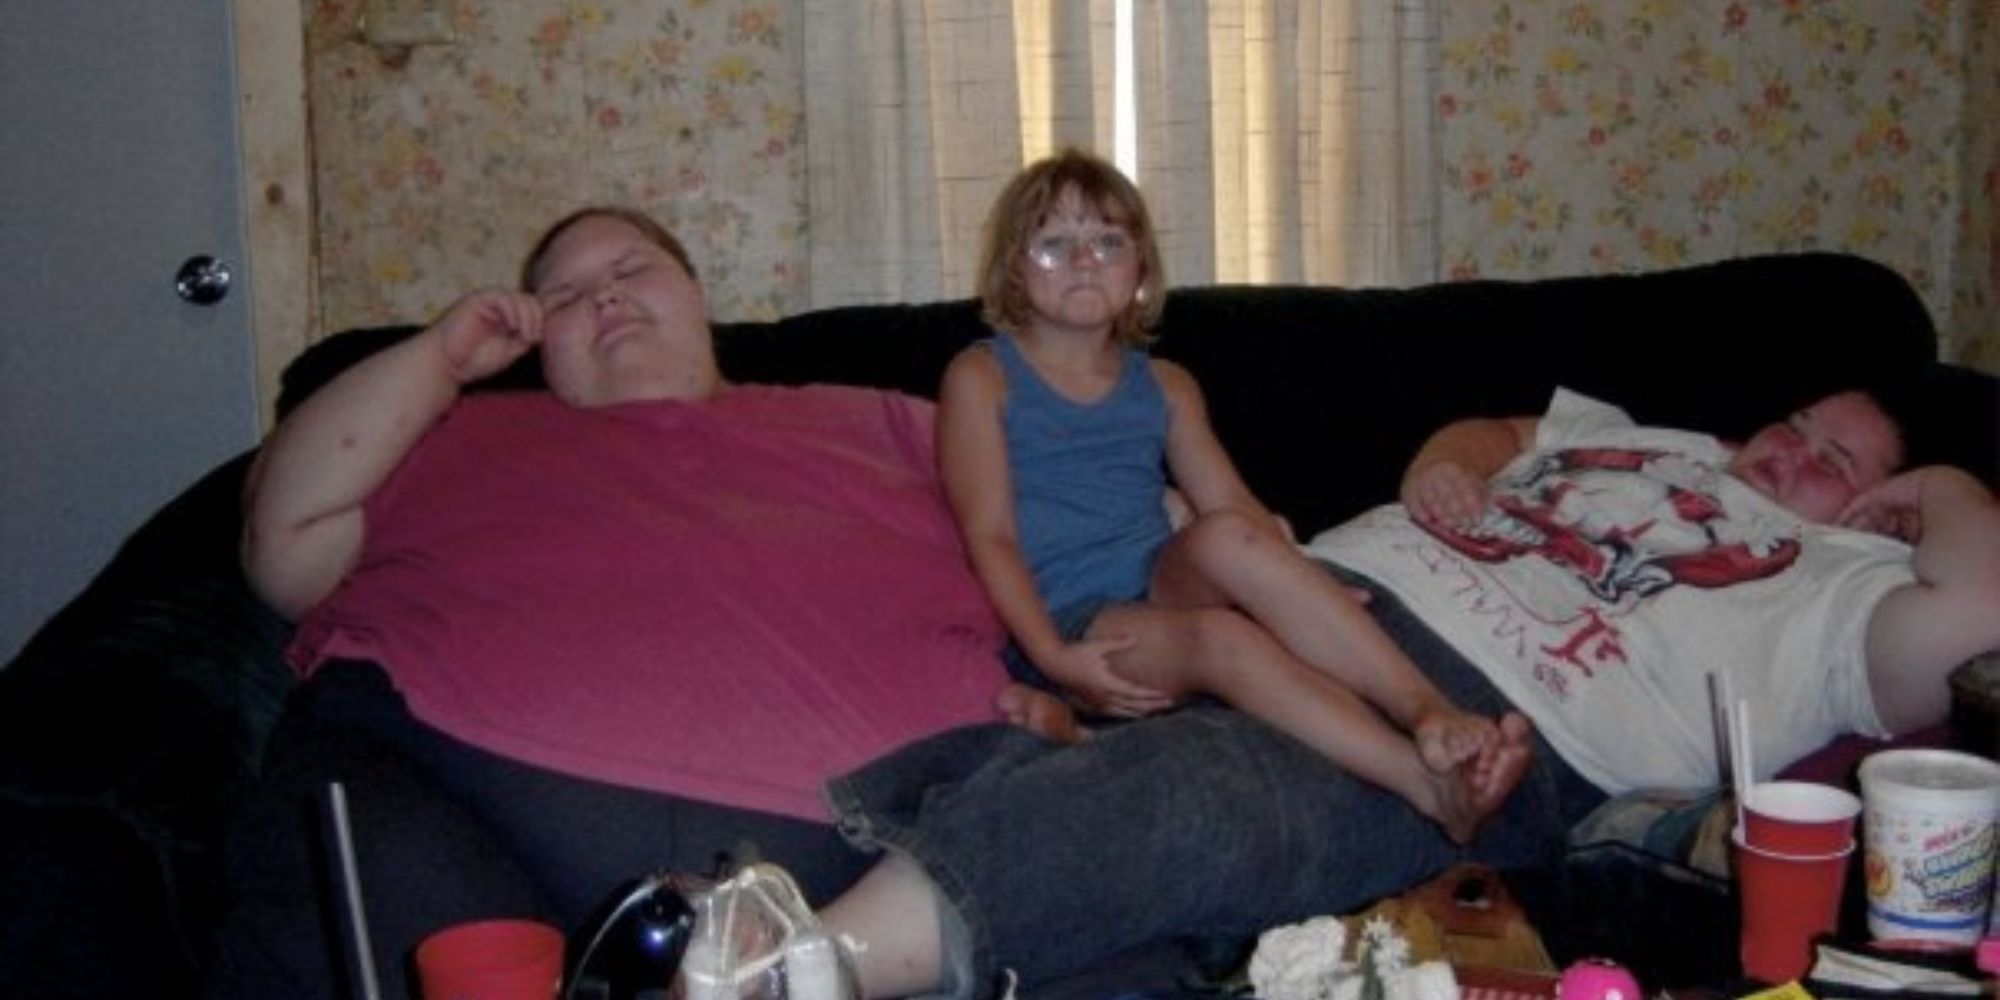 1000-lb Sisters, Tammy Slaton, Amy Slaton & Emily Wentworth sitting on a couch